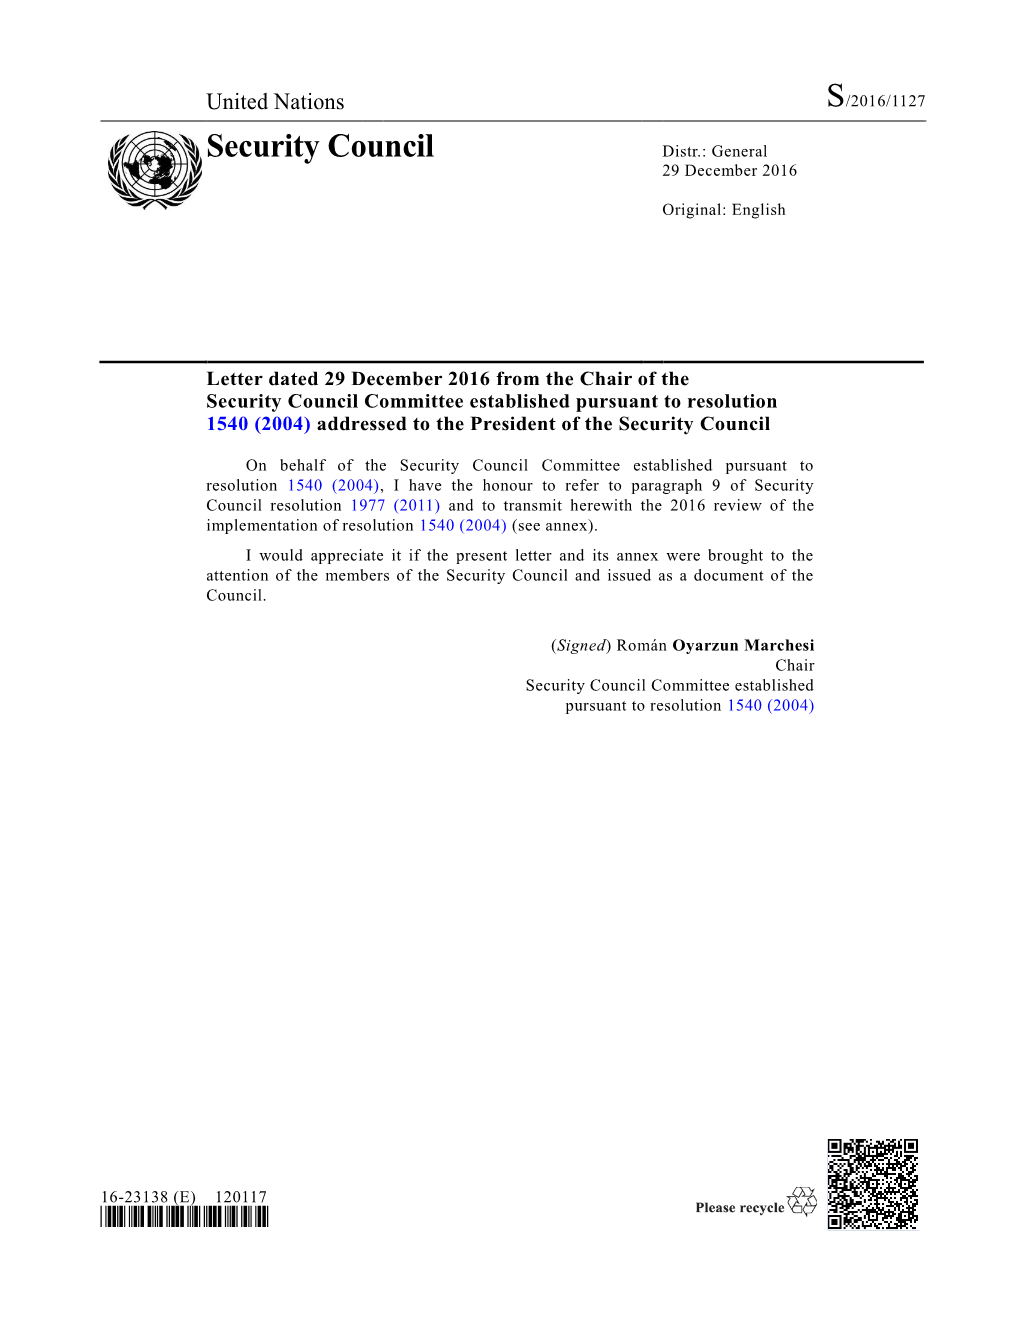 Security Council Distr.: General 29 December 2016